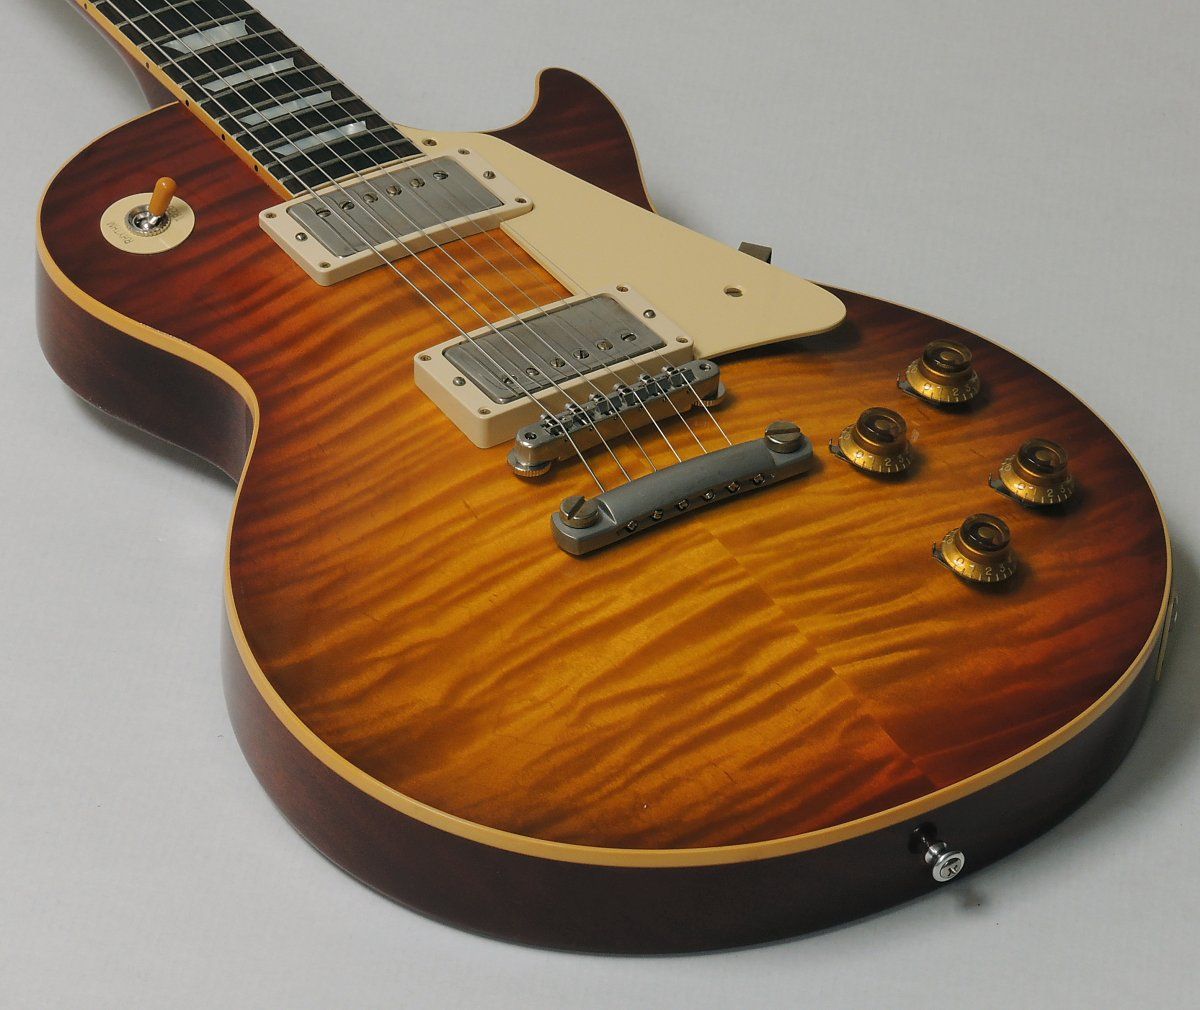 Gibson%20Les%20Paul%202018%20982964%201200_zpsimmnkxxf.jpg